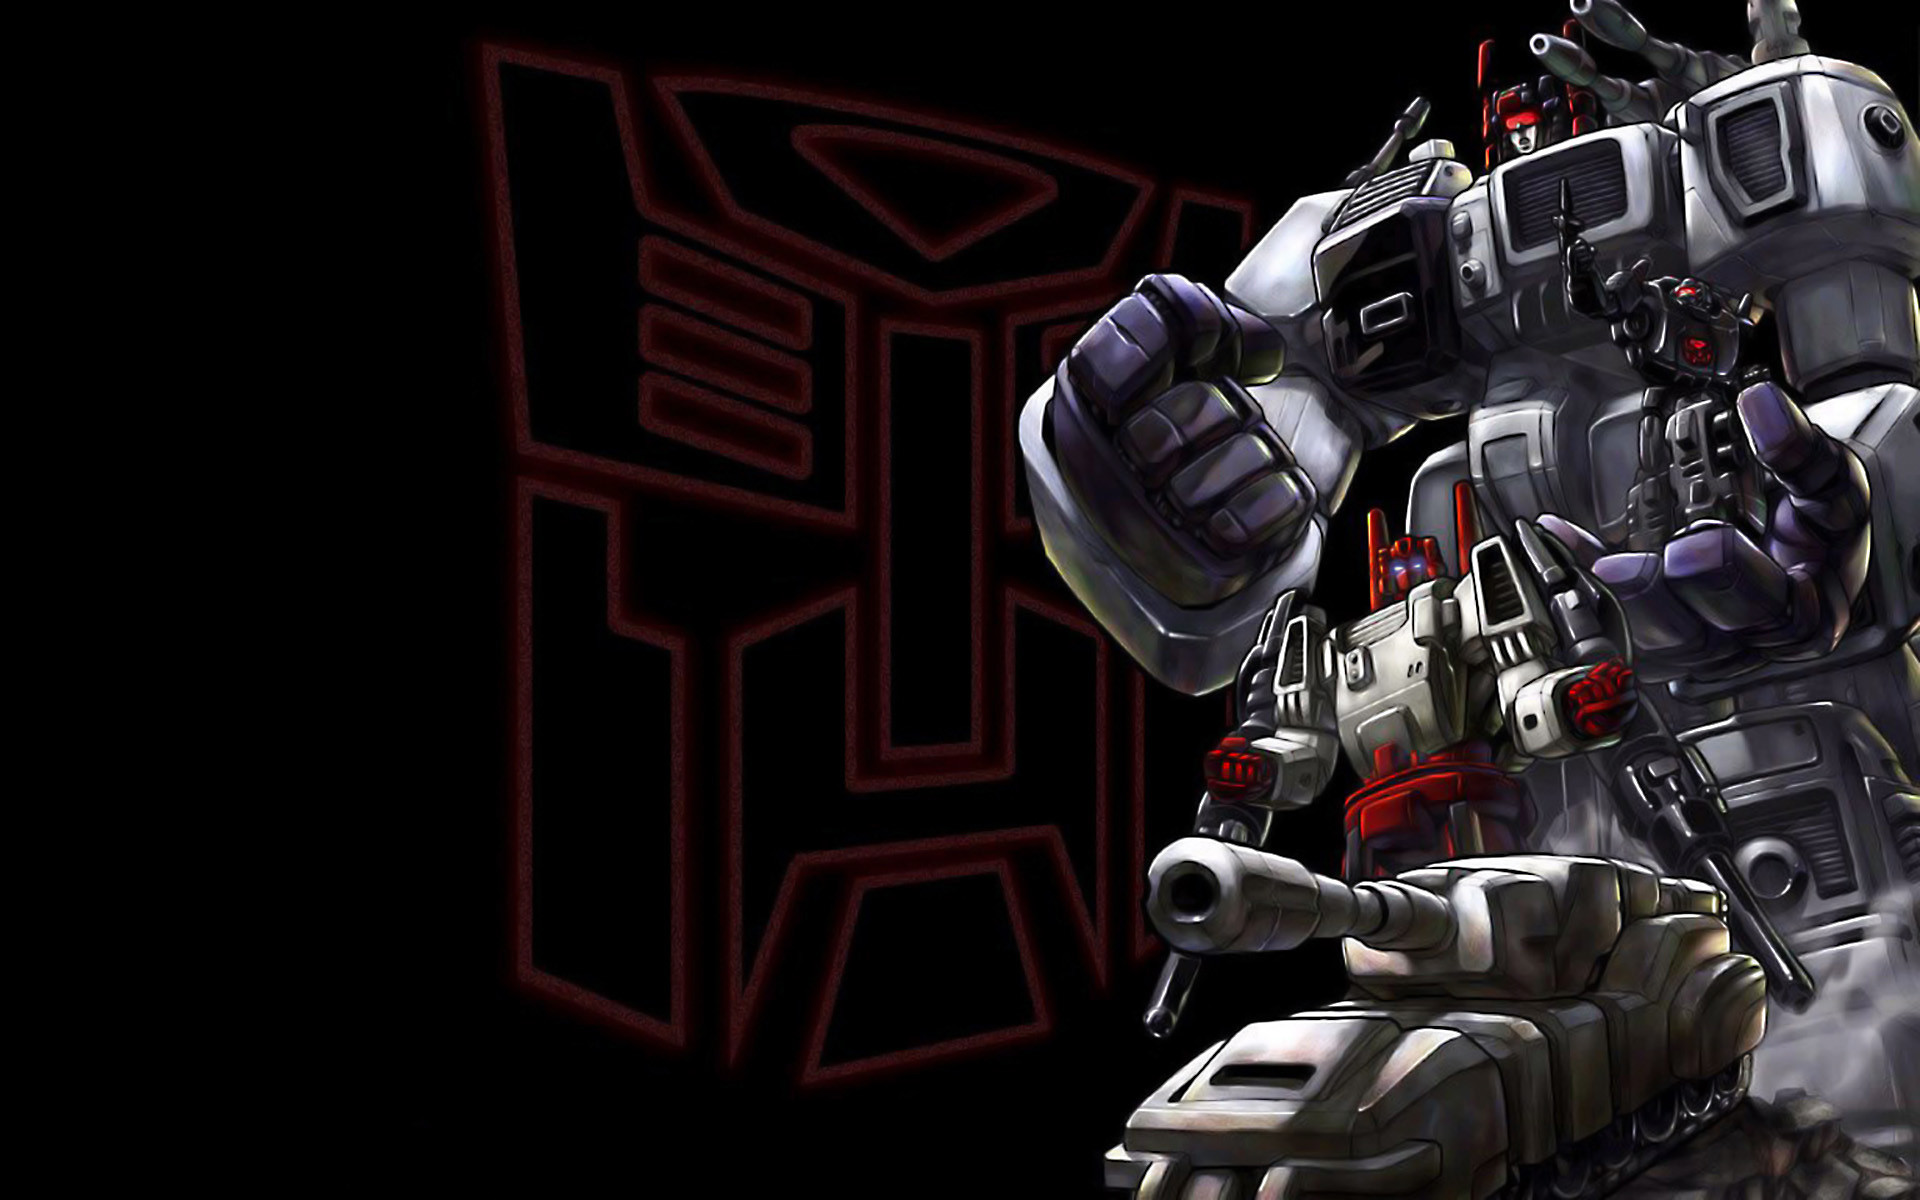 Transformers G1 Wallpaper.